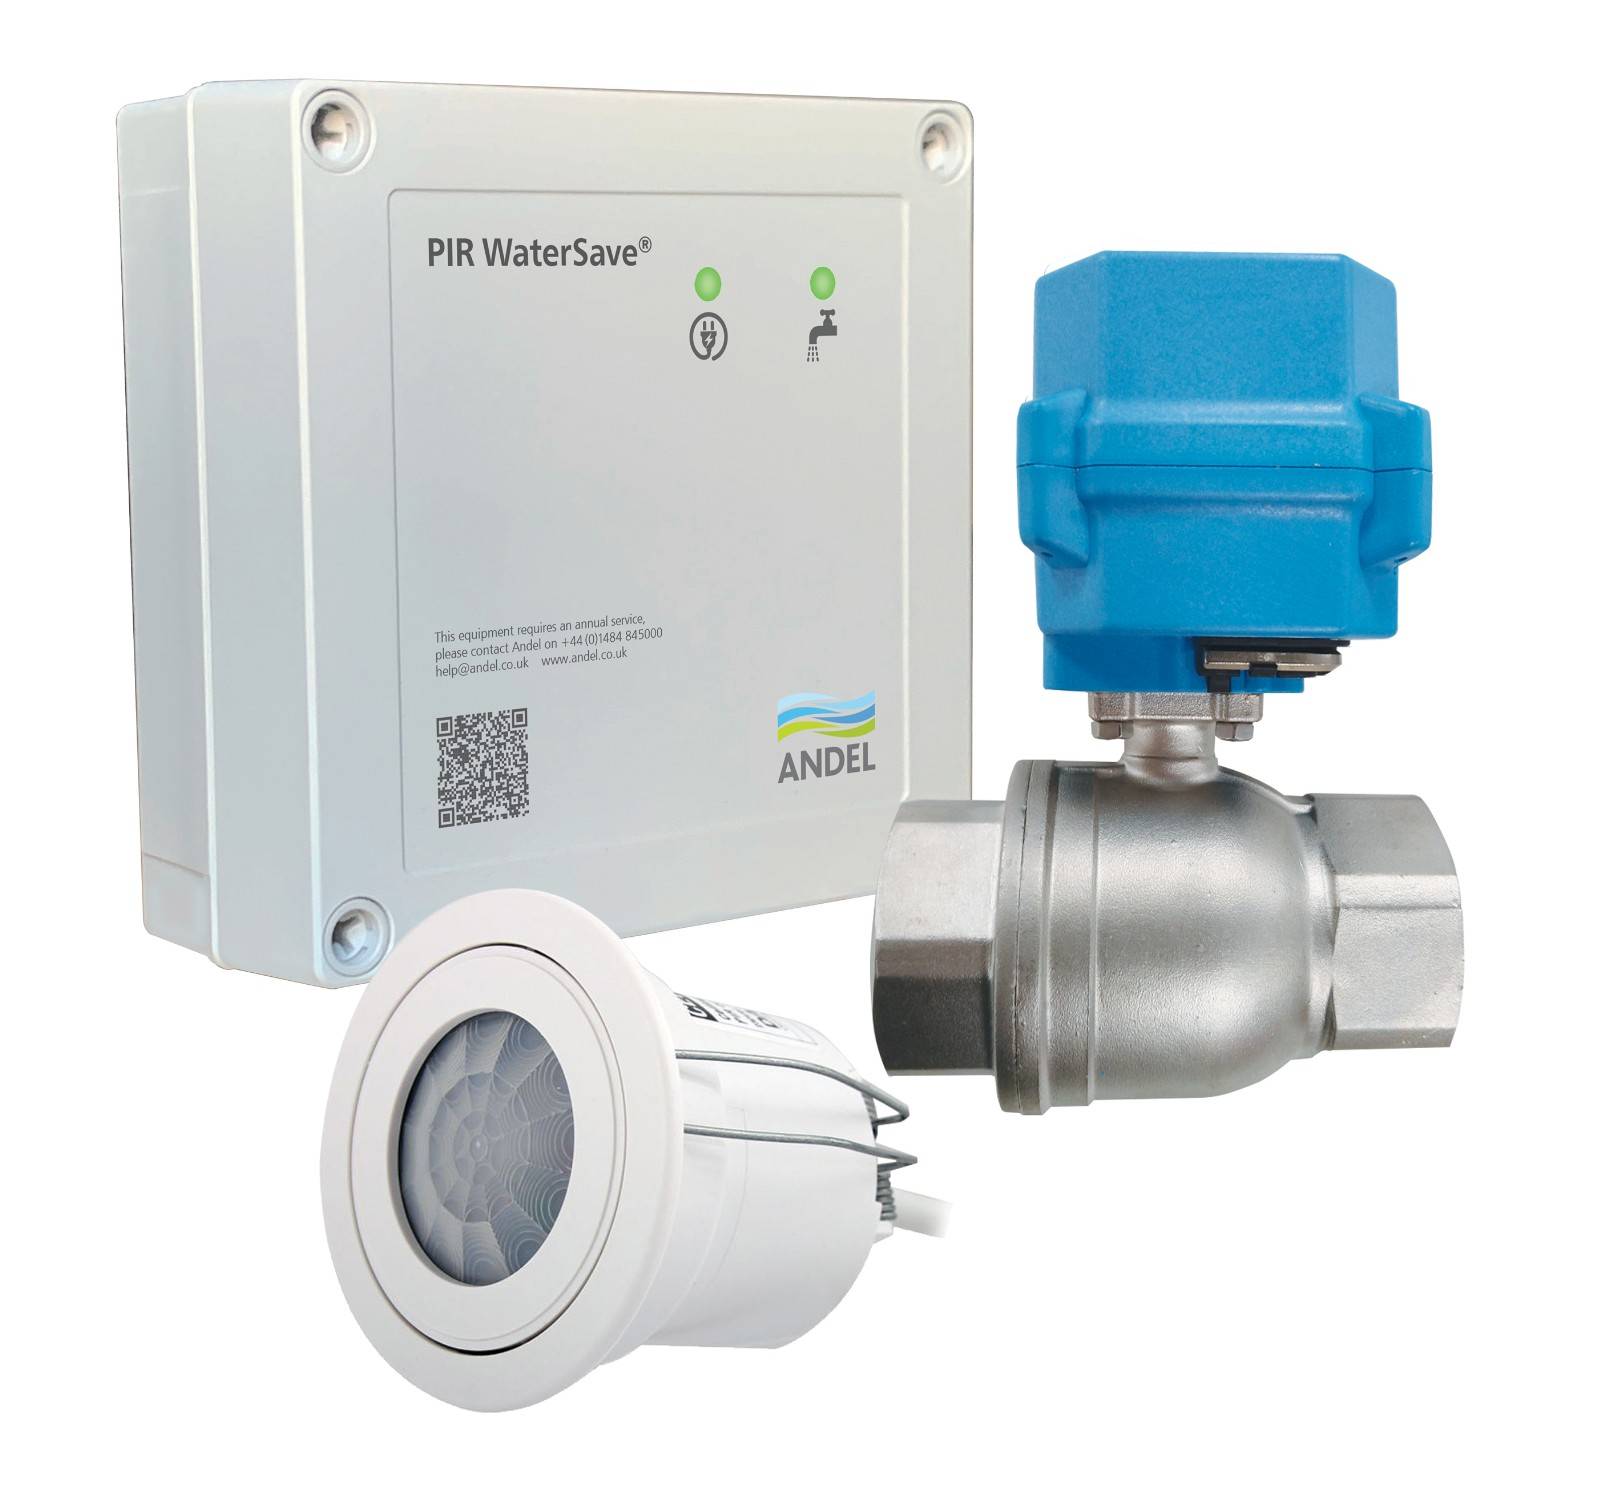 PIR WaterSave® - Water Flow Control System